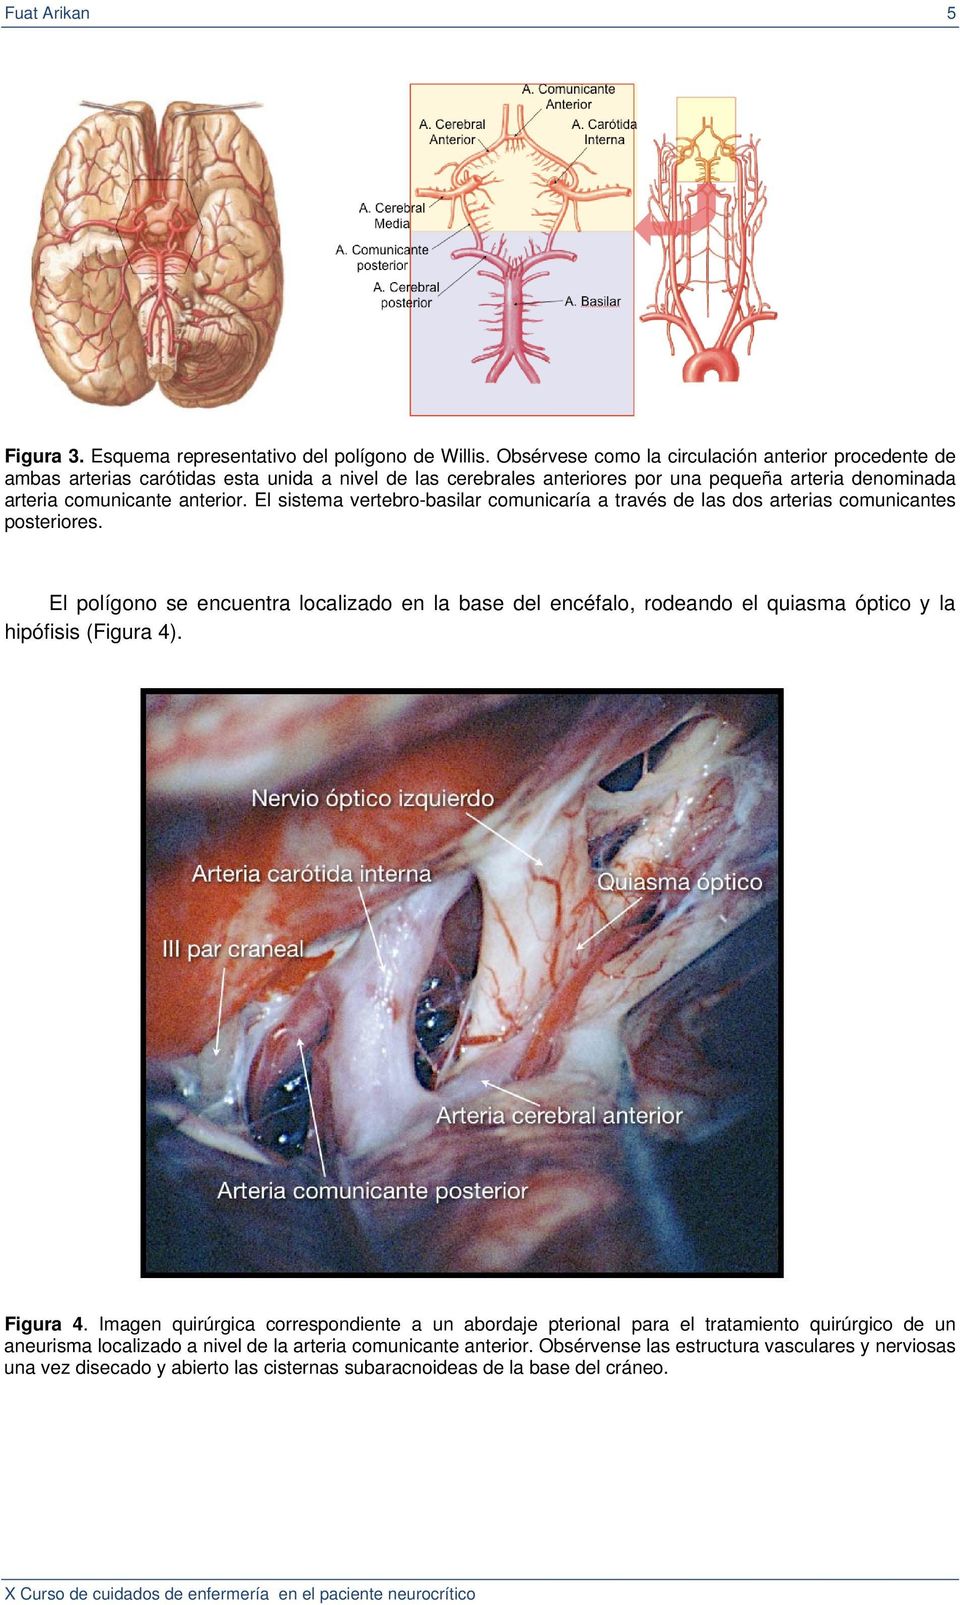 El sistema vertebro-basilar comunicaría a través de las dos arterias comunicantes posteriores.